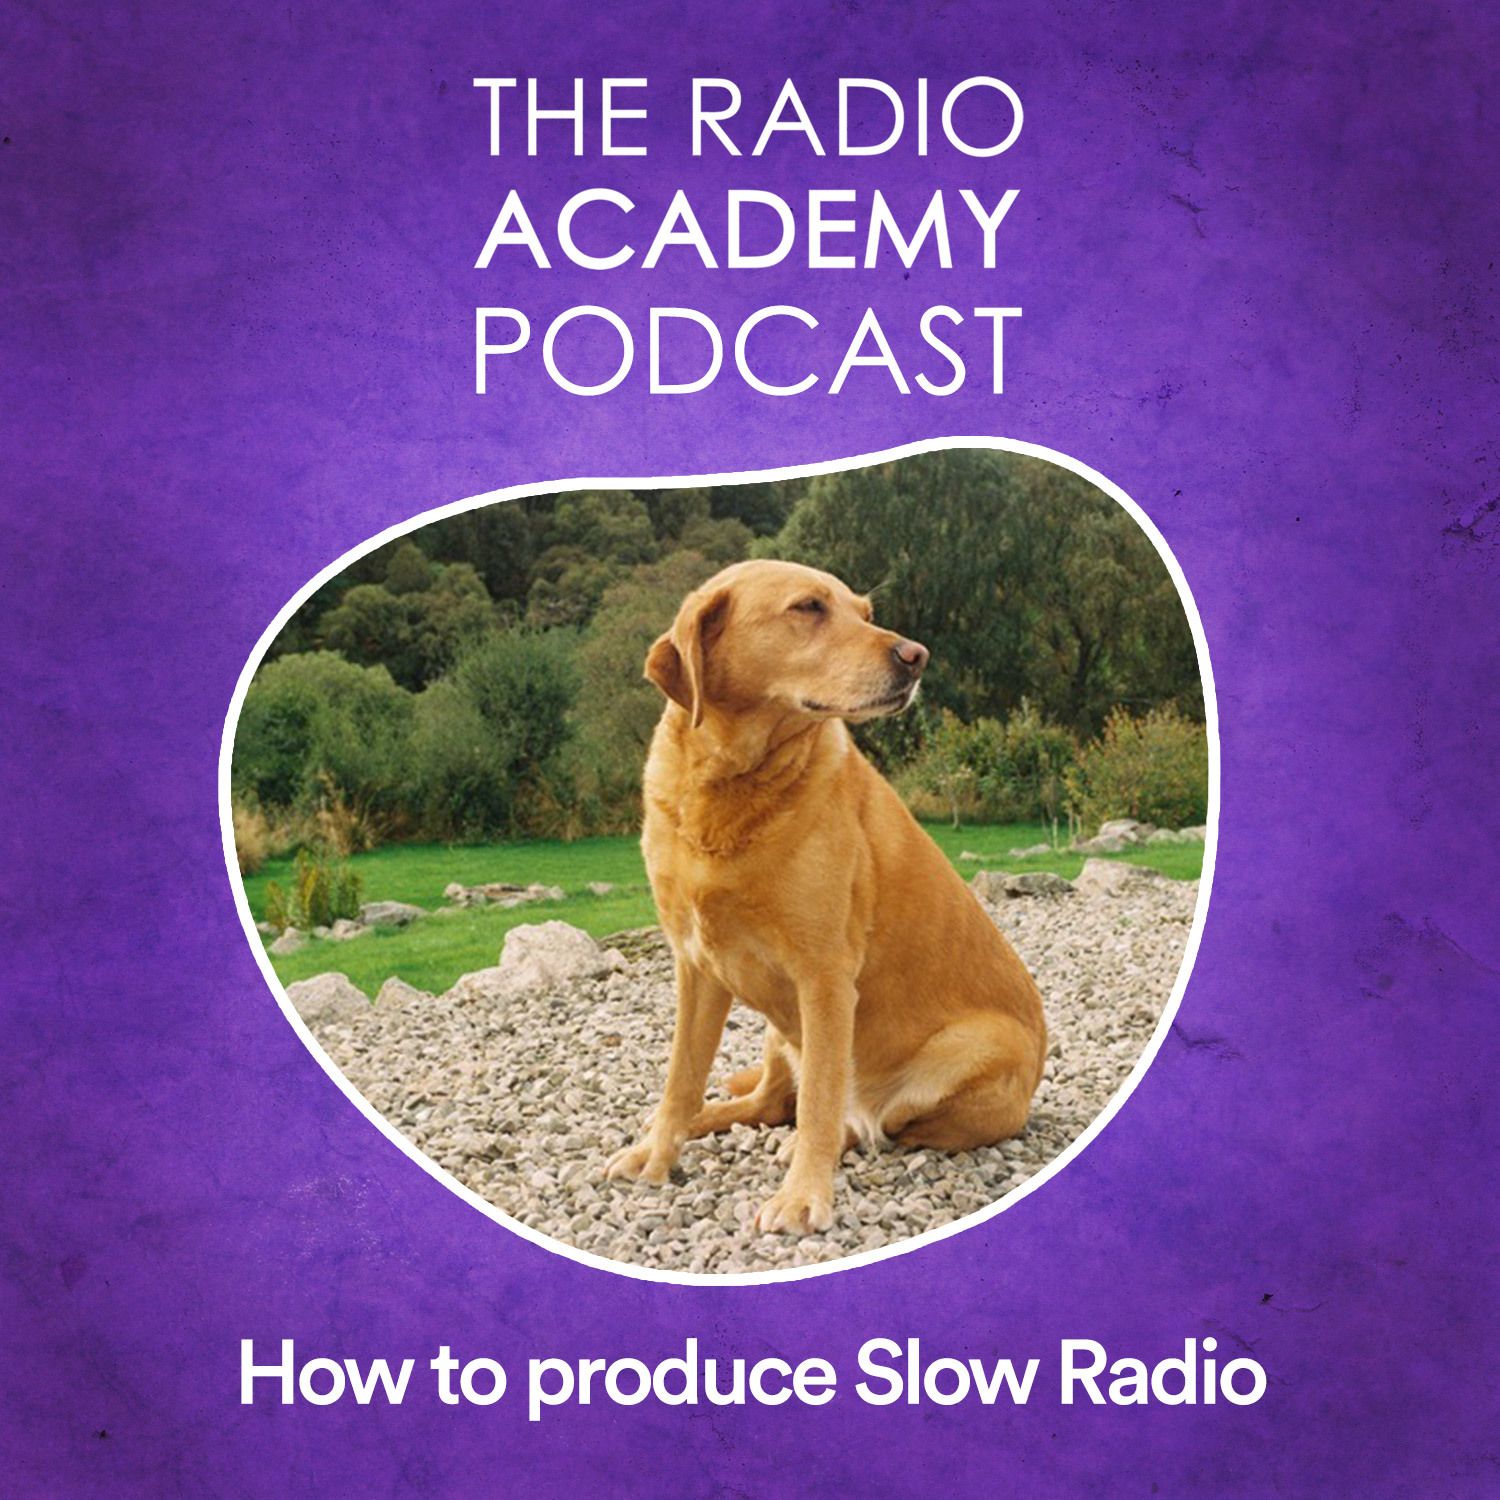 The Radio Academy Podcast / How to produce Slow Radio (with Honey the Dog)